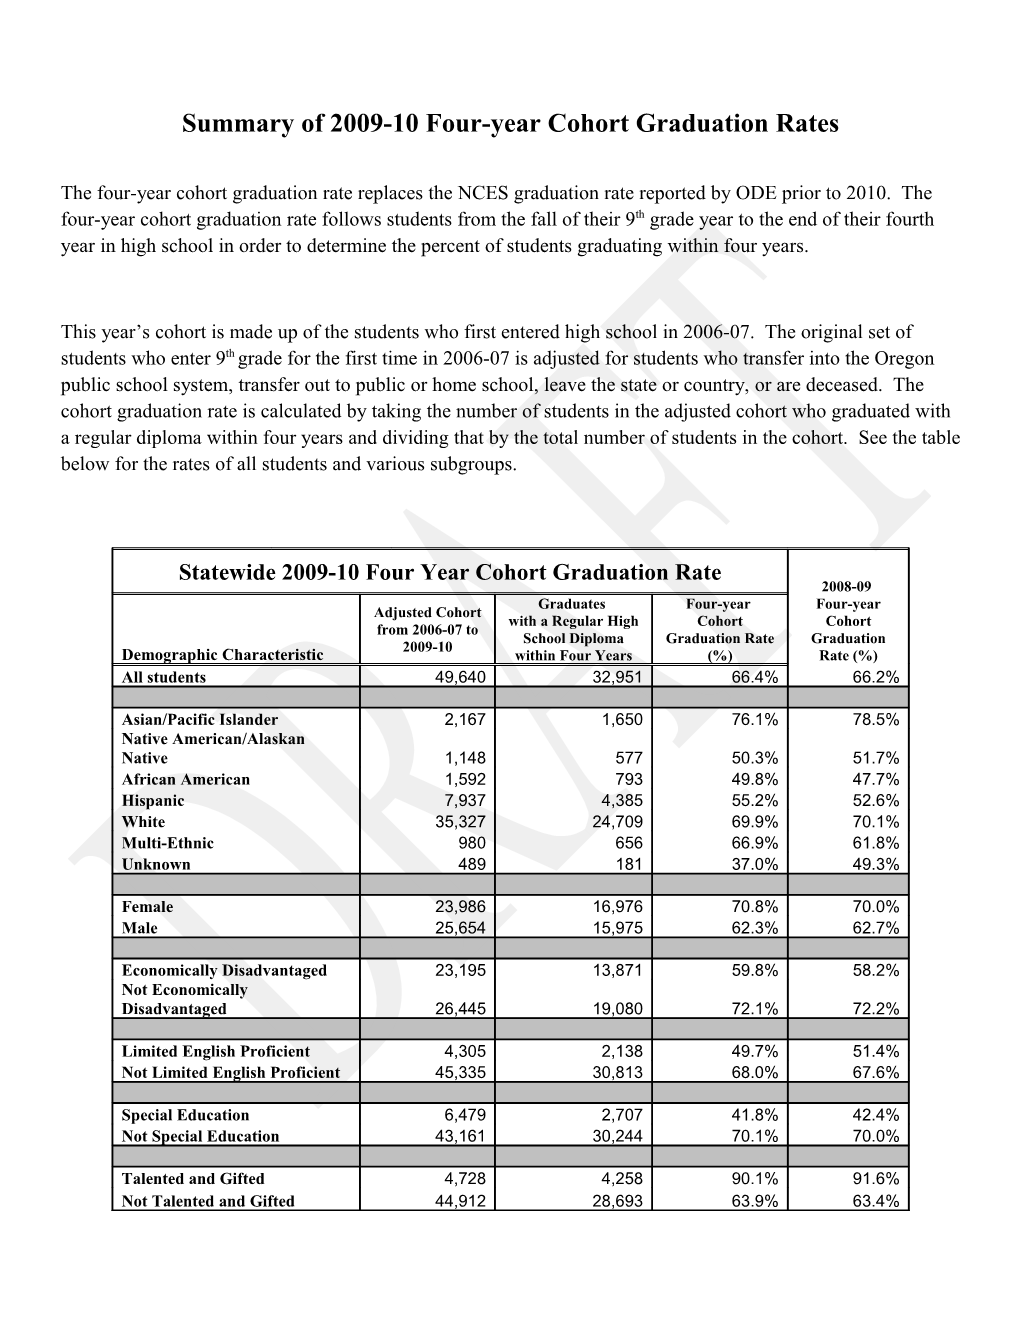 Summary of 2009-10 Four-Year Cohort Graduation Rates